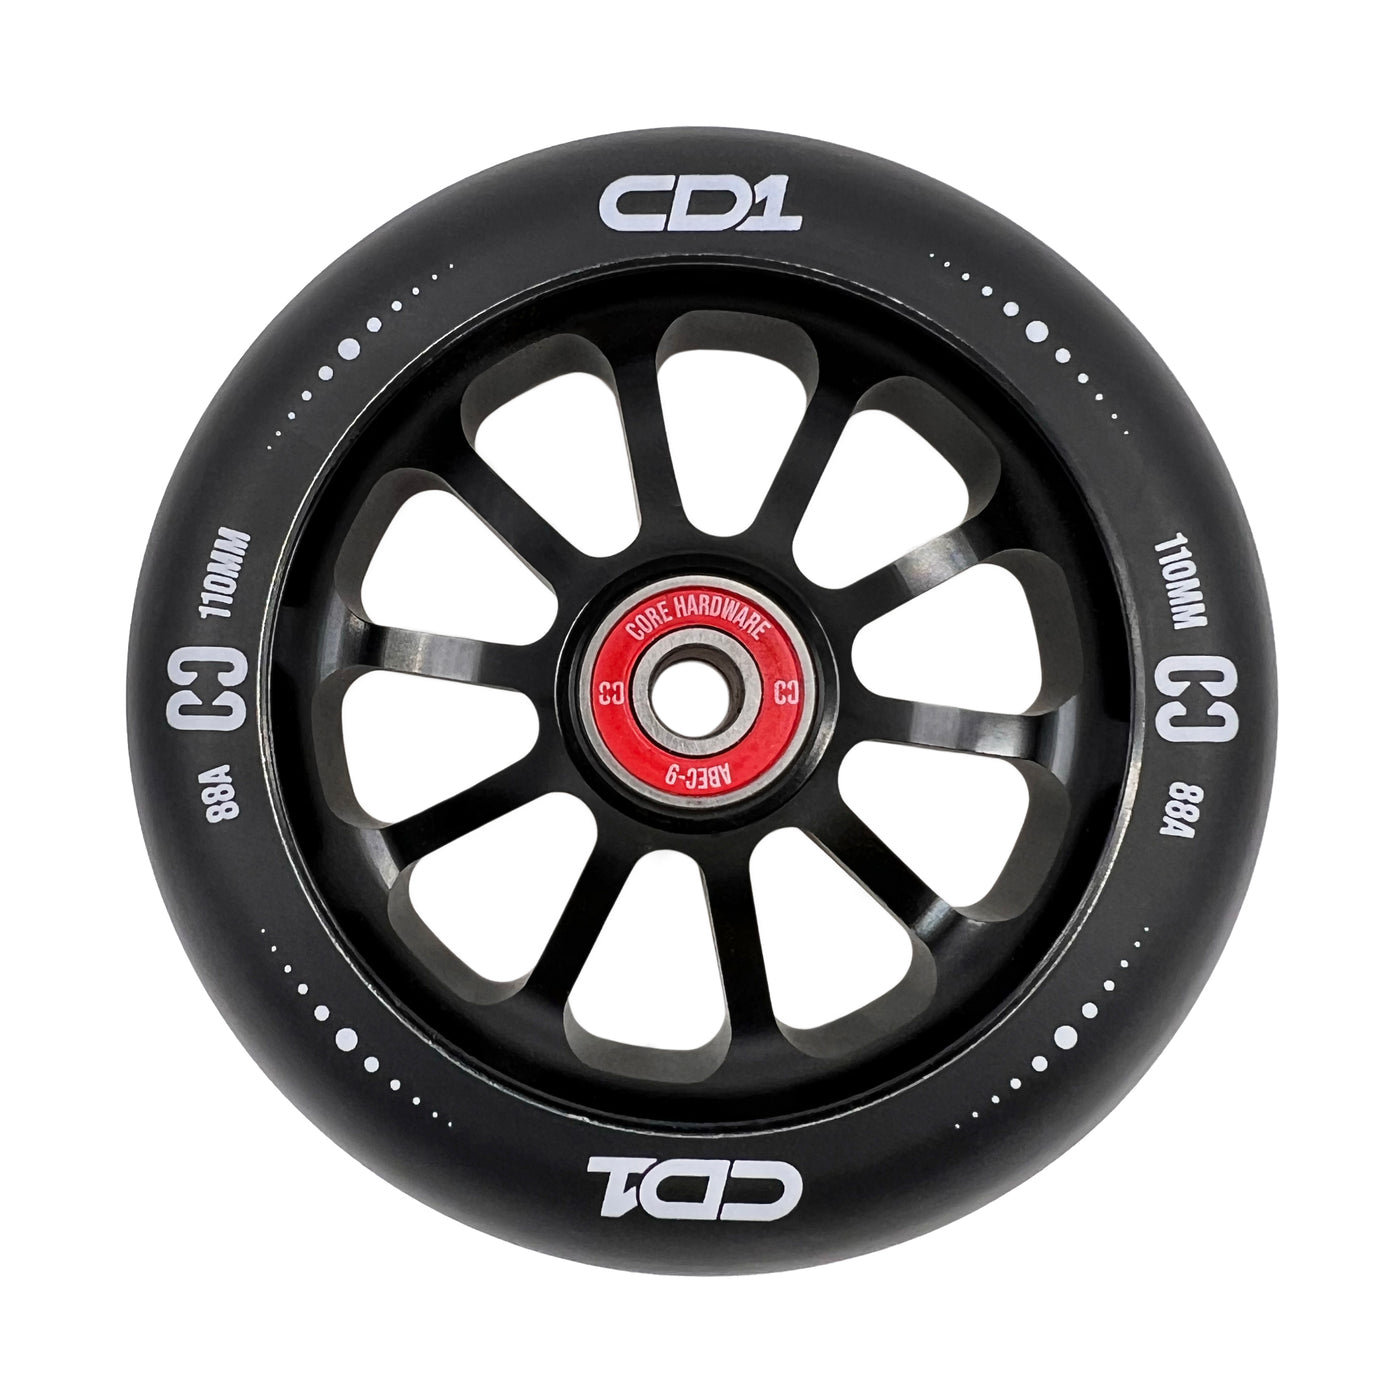 CORE CD1 Spoked Stunt Scooter Wheel 110mm - Black